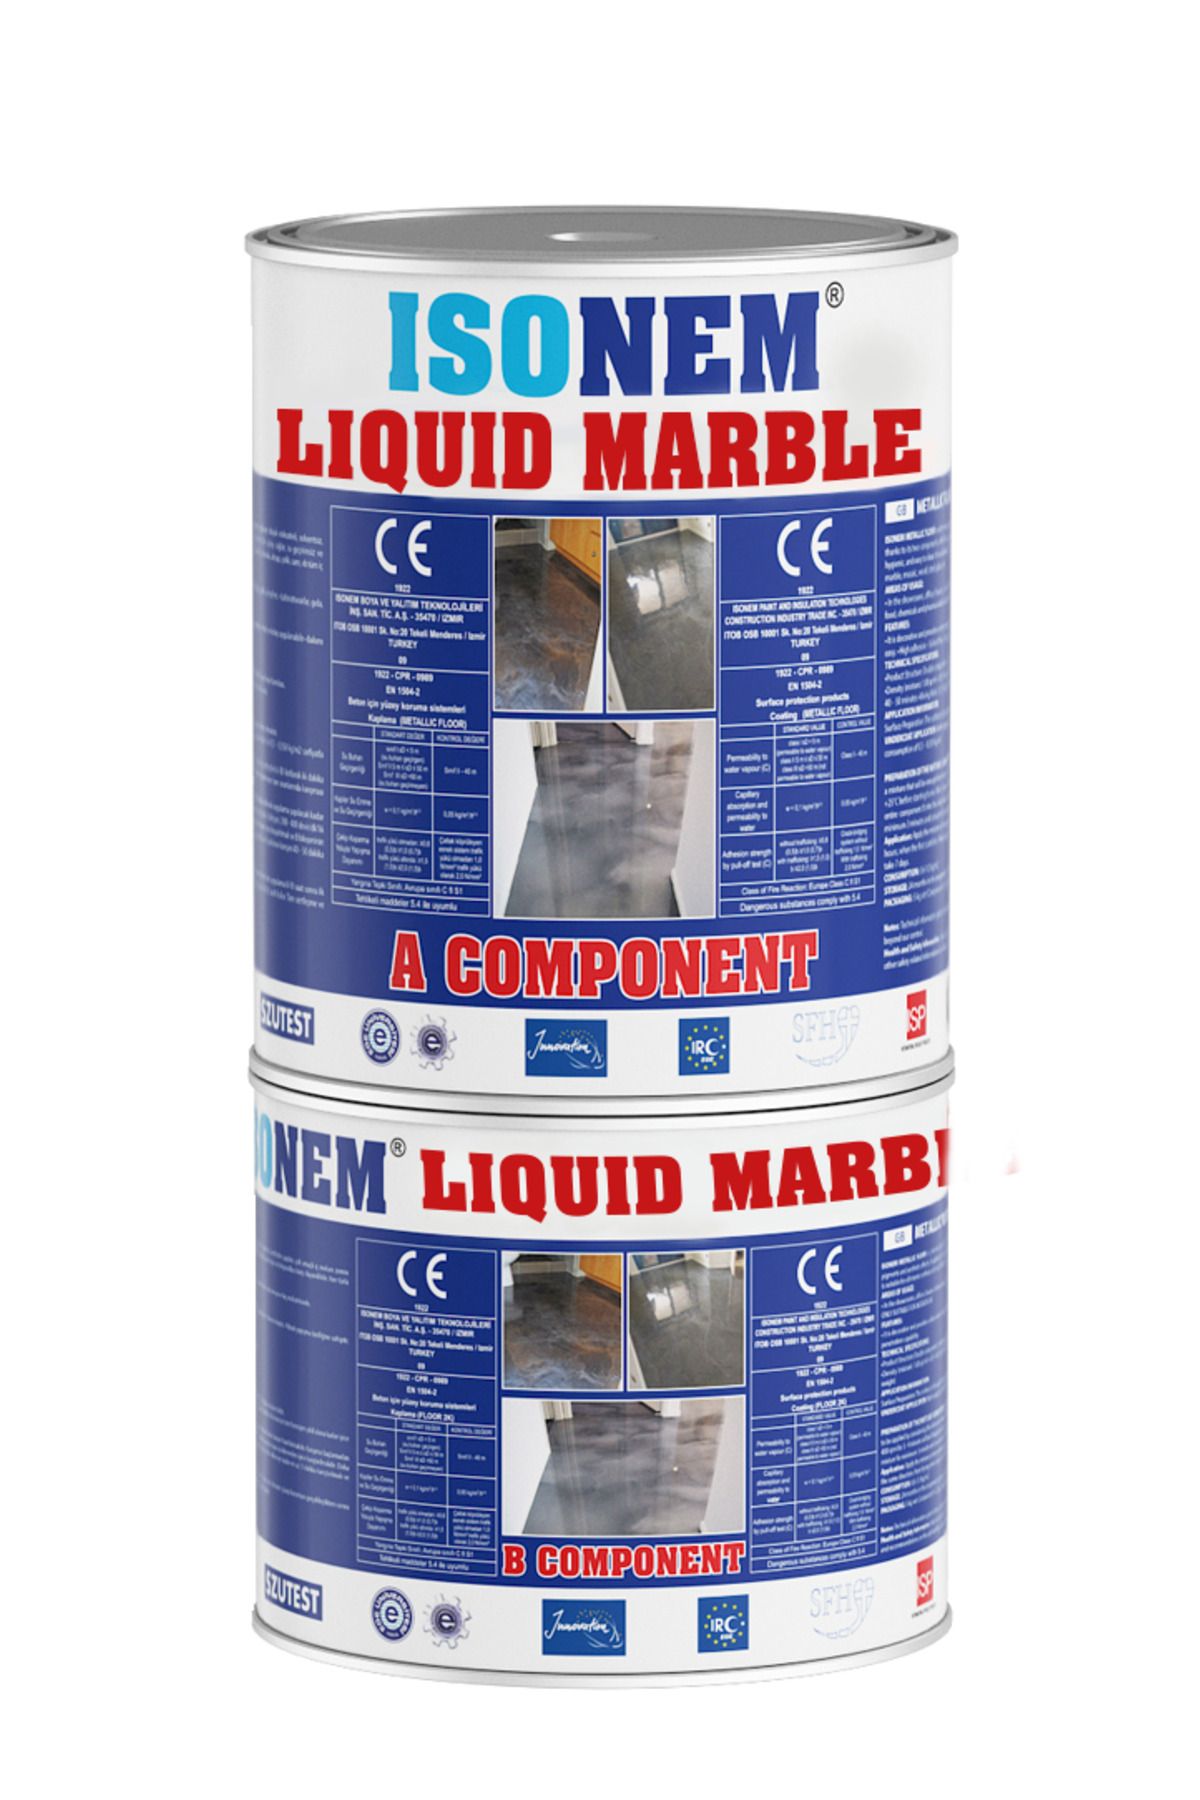 Isonem Liquid Marble ( Sıvı Mermer ) Mermer için sıvı kaplama Malzemesi 2.5 kg set M10 Gold (ALTIN)